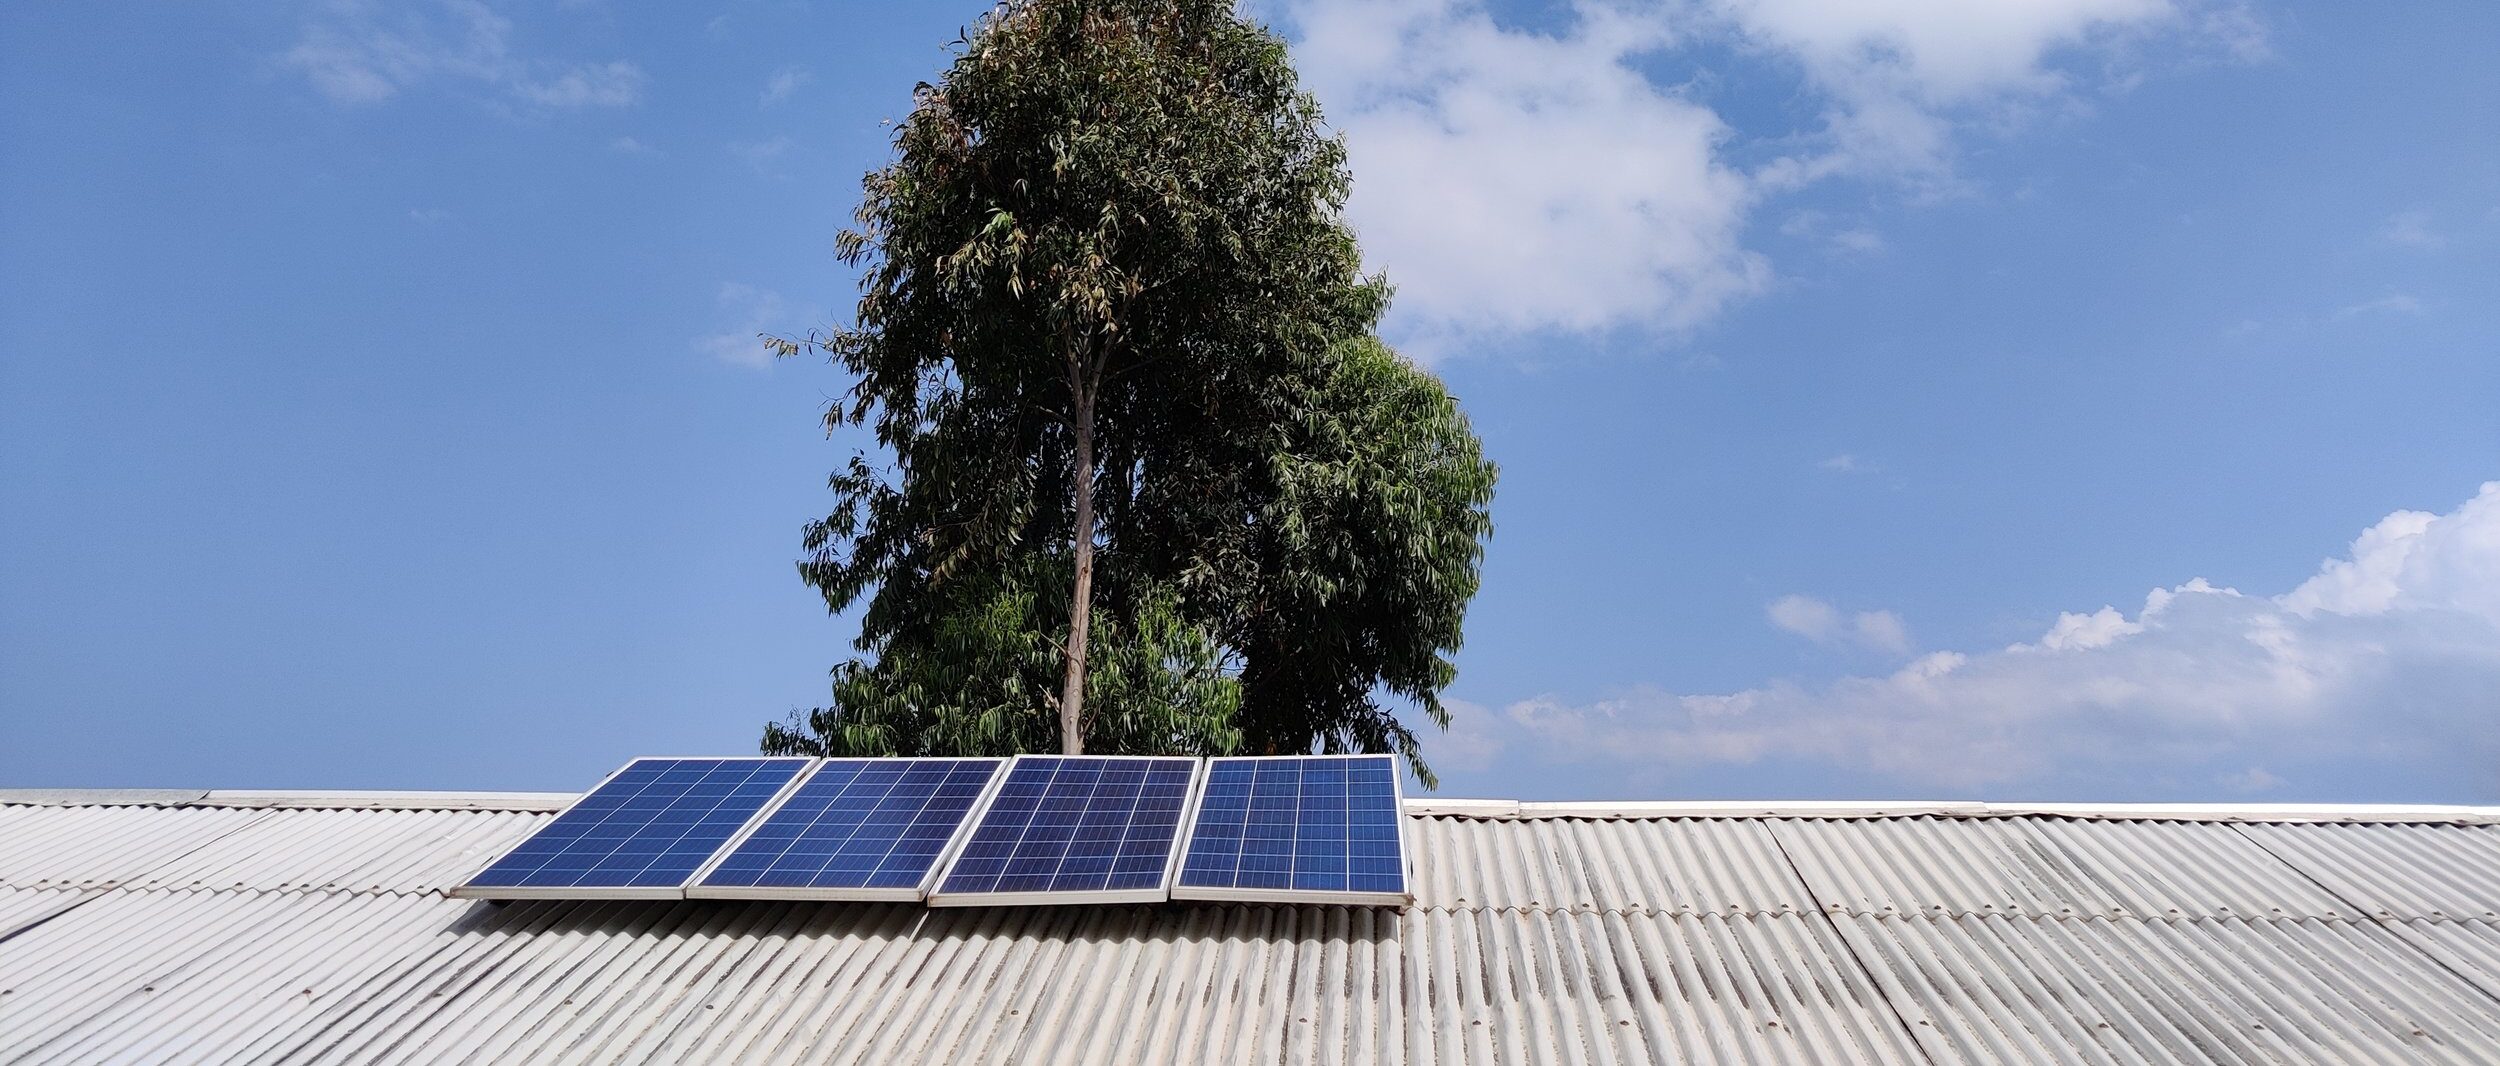 Zion Community Solar Power